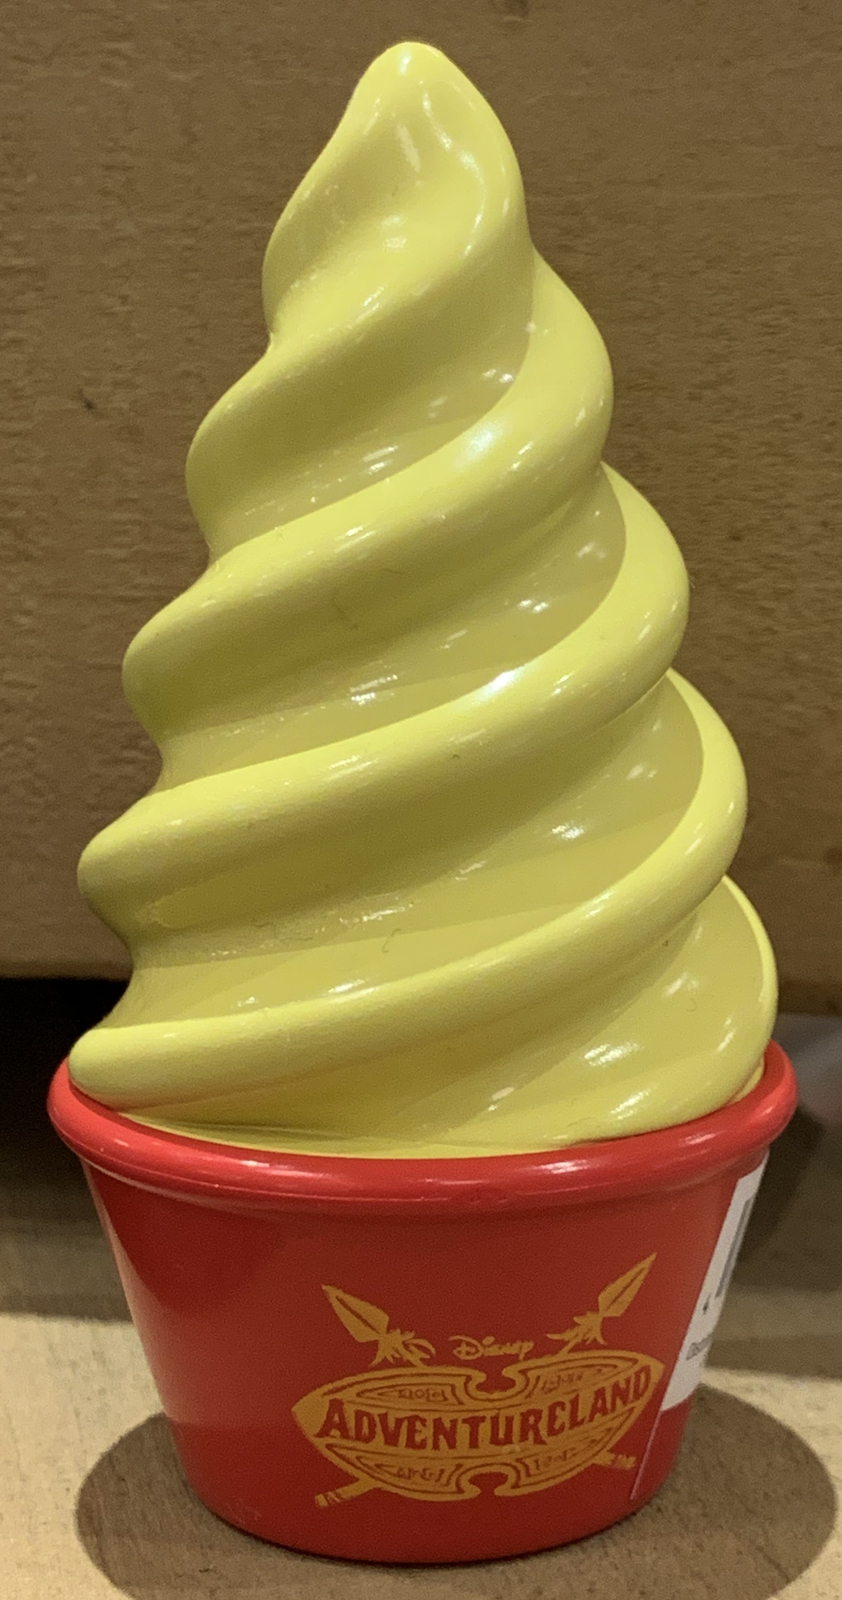 Disney Parks Pineapple Dole Whip Ice Cream Adventureland Refrigerator Magnet NEW - $19.90